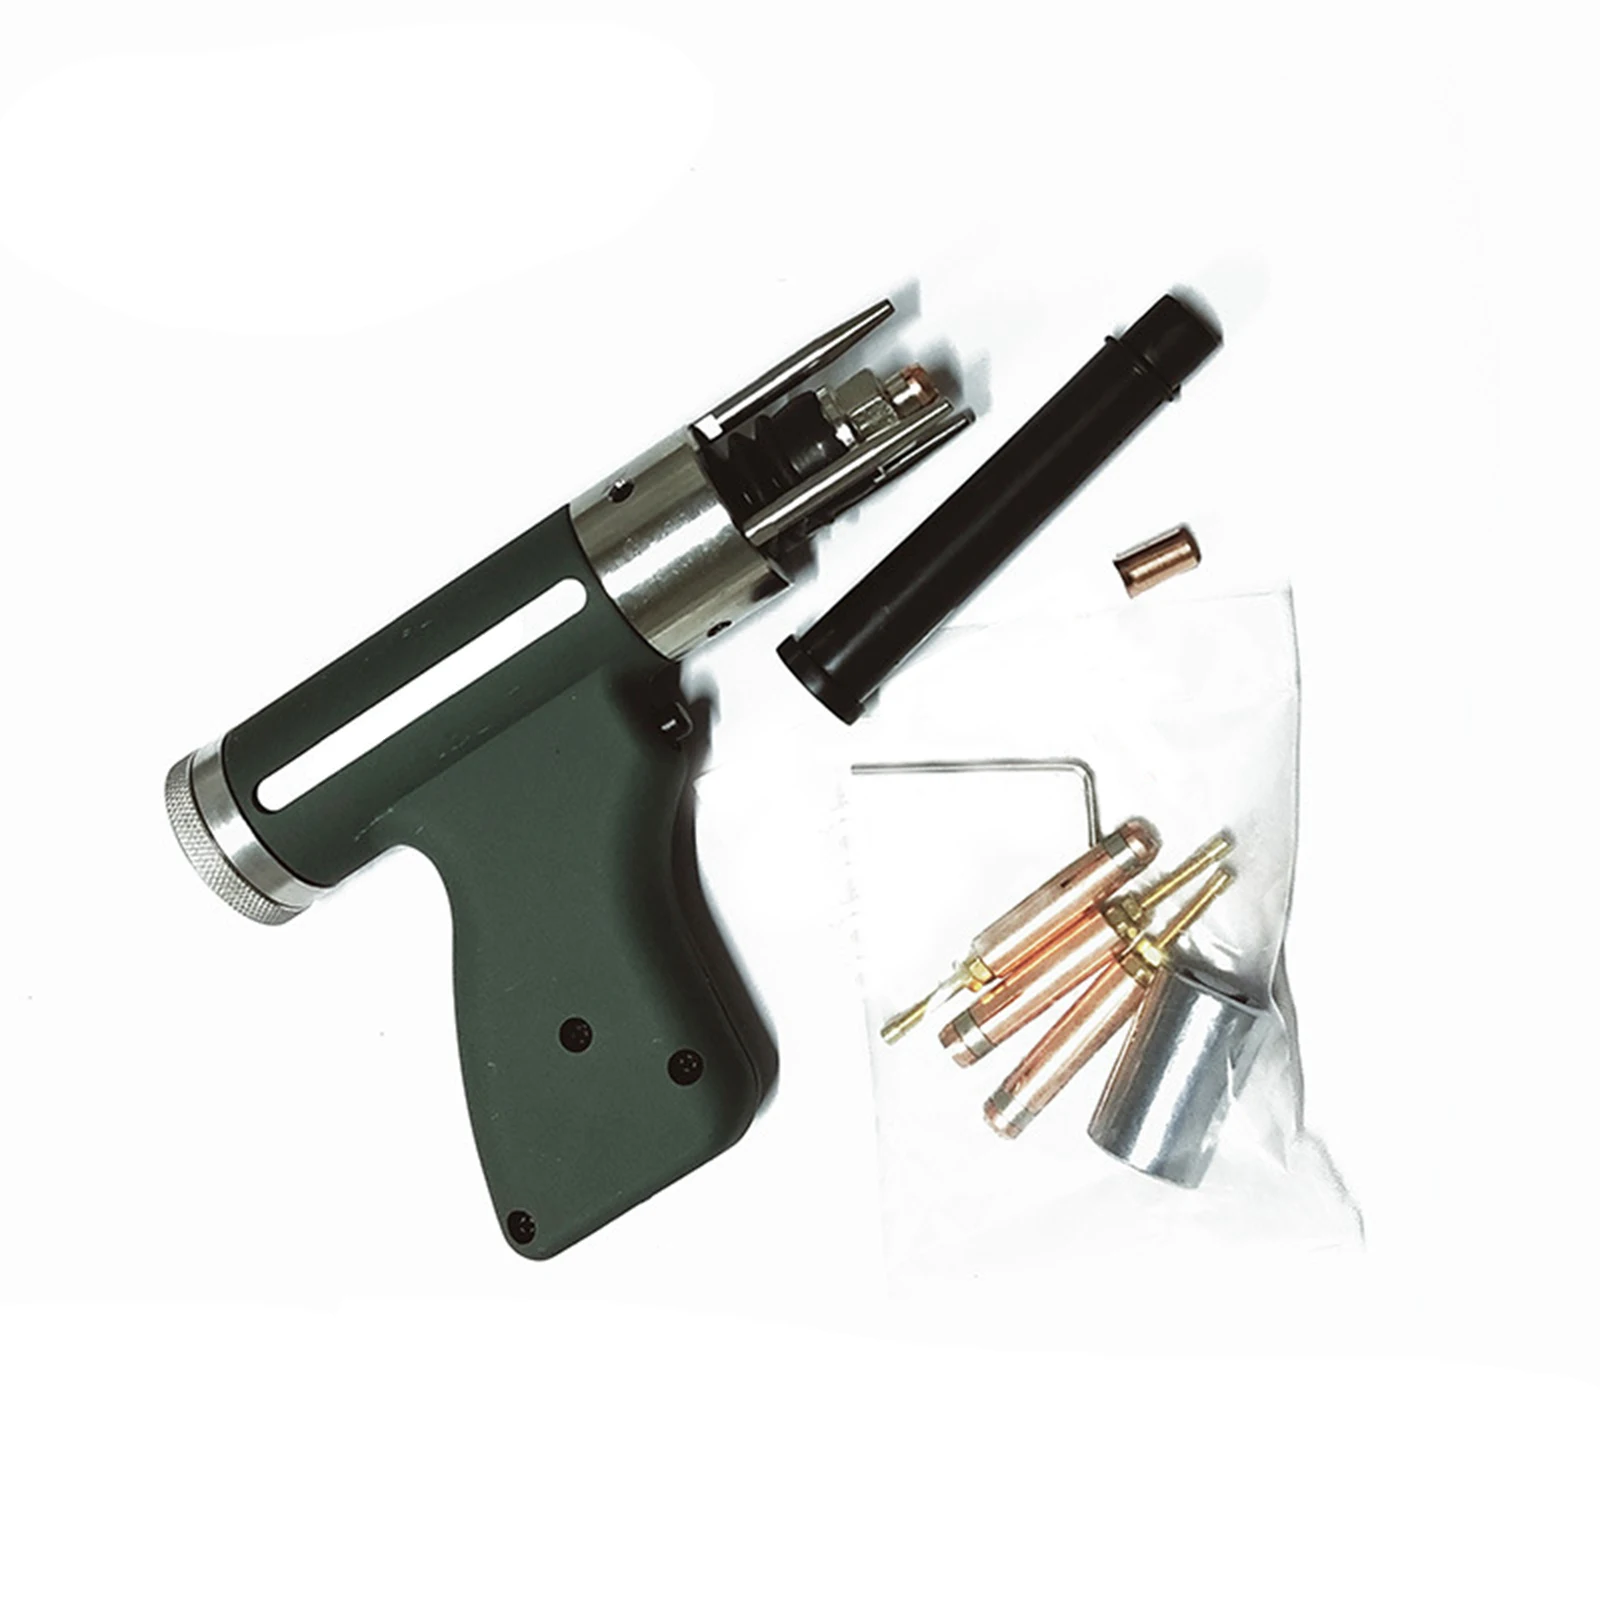 Welding Gun Kind Of Nail Gun Stud Welding Torch Capacitor Discharge Electric Soldering Iron Kit Repair Tools M3/4/5/6/8/10 Studs